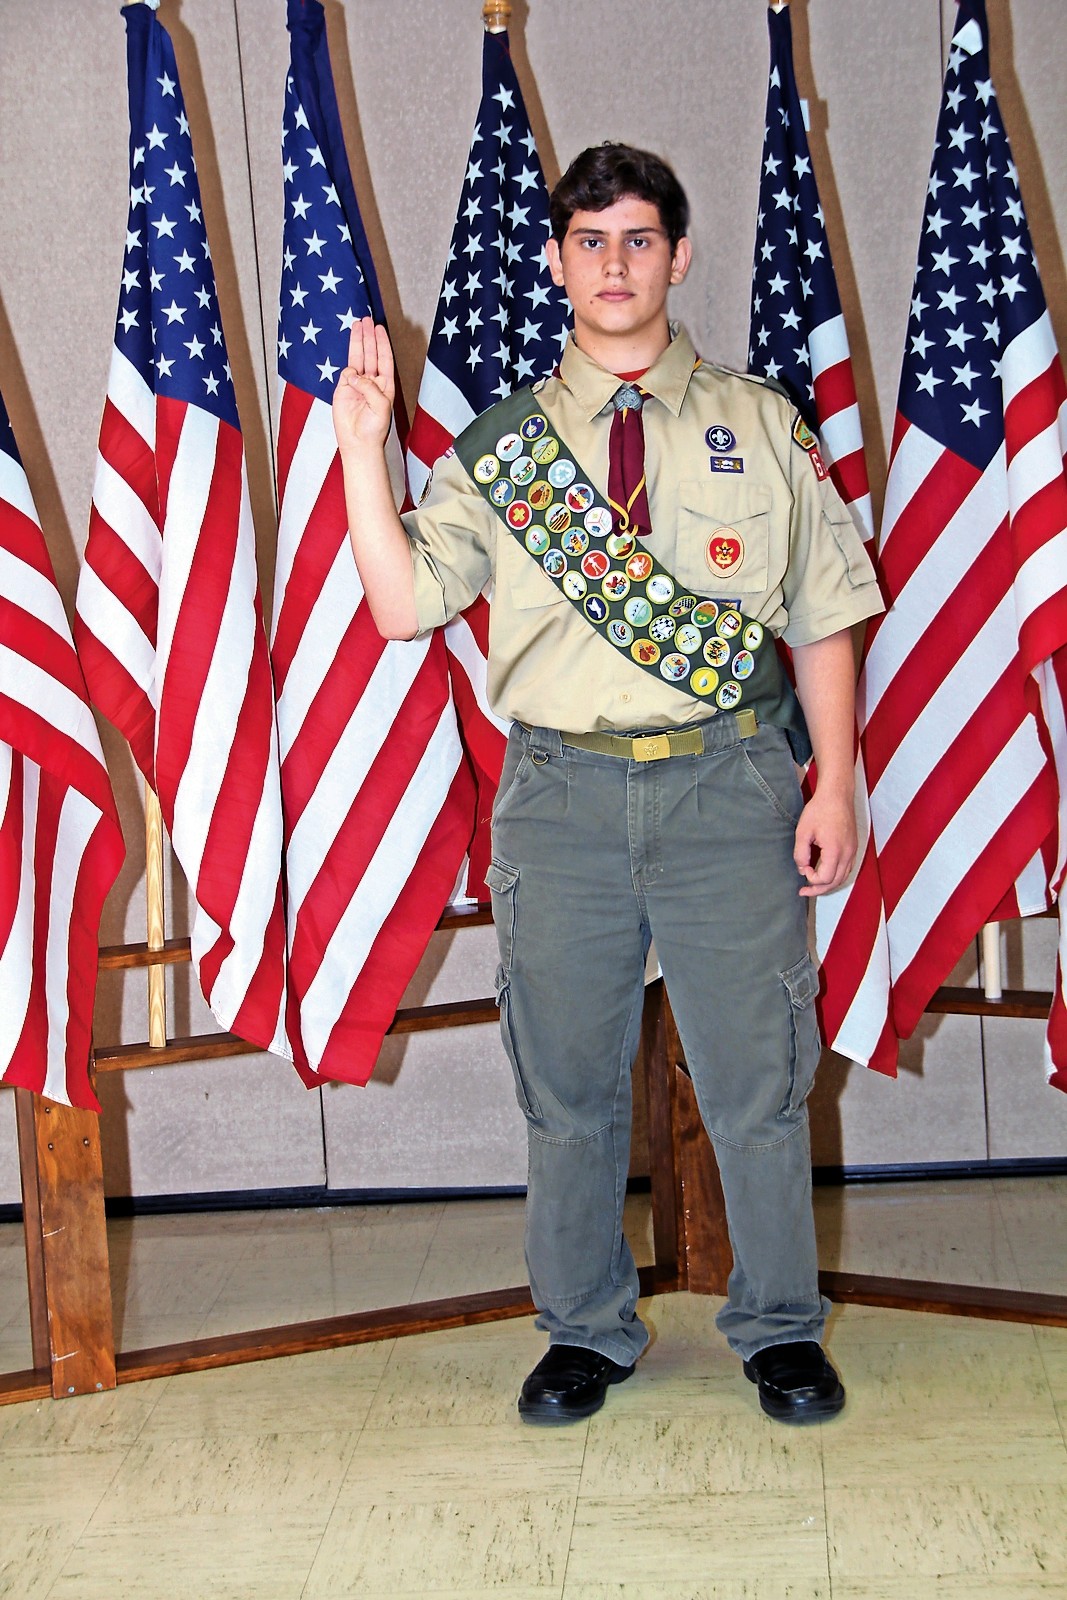 Eagle Scout Nathaniel Lettieri